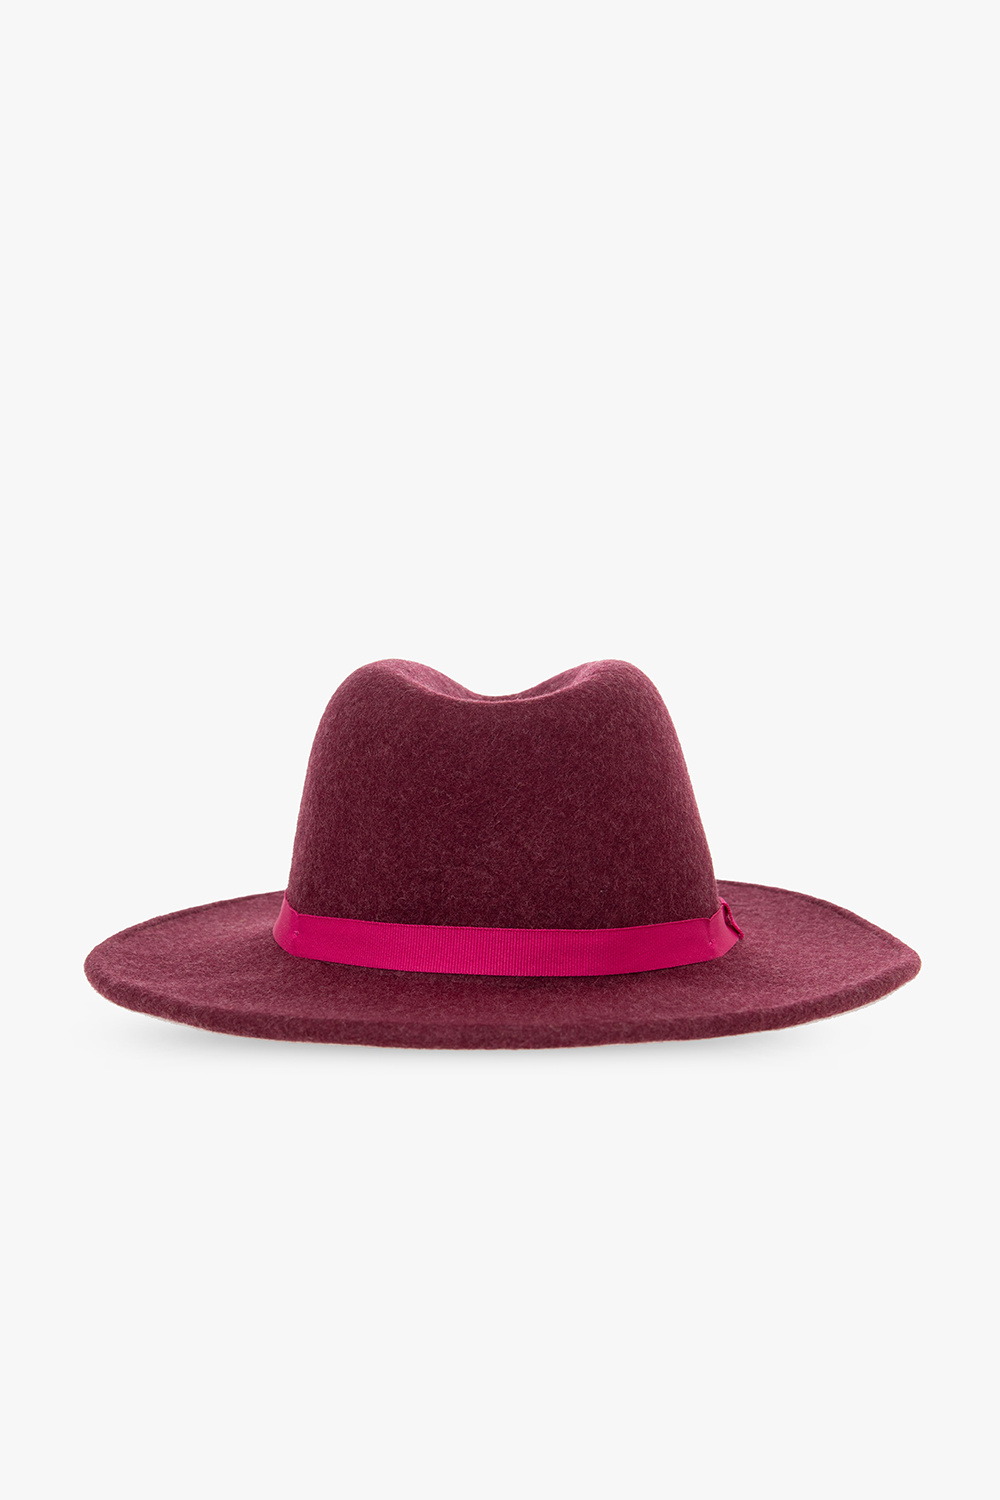 Paul Smith Wool brown hat